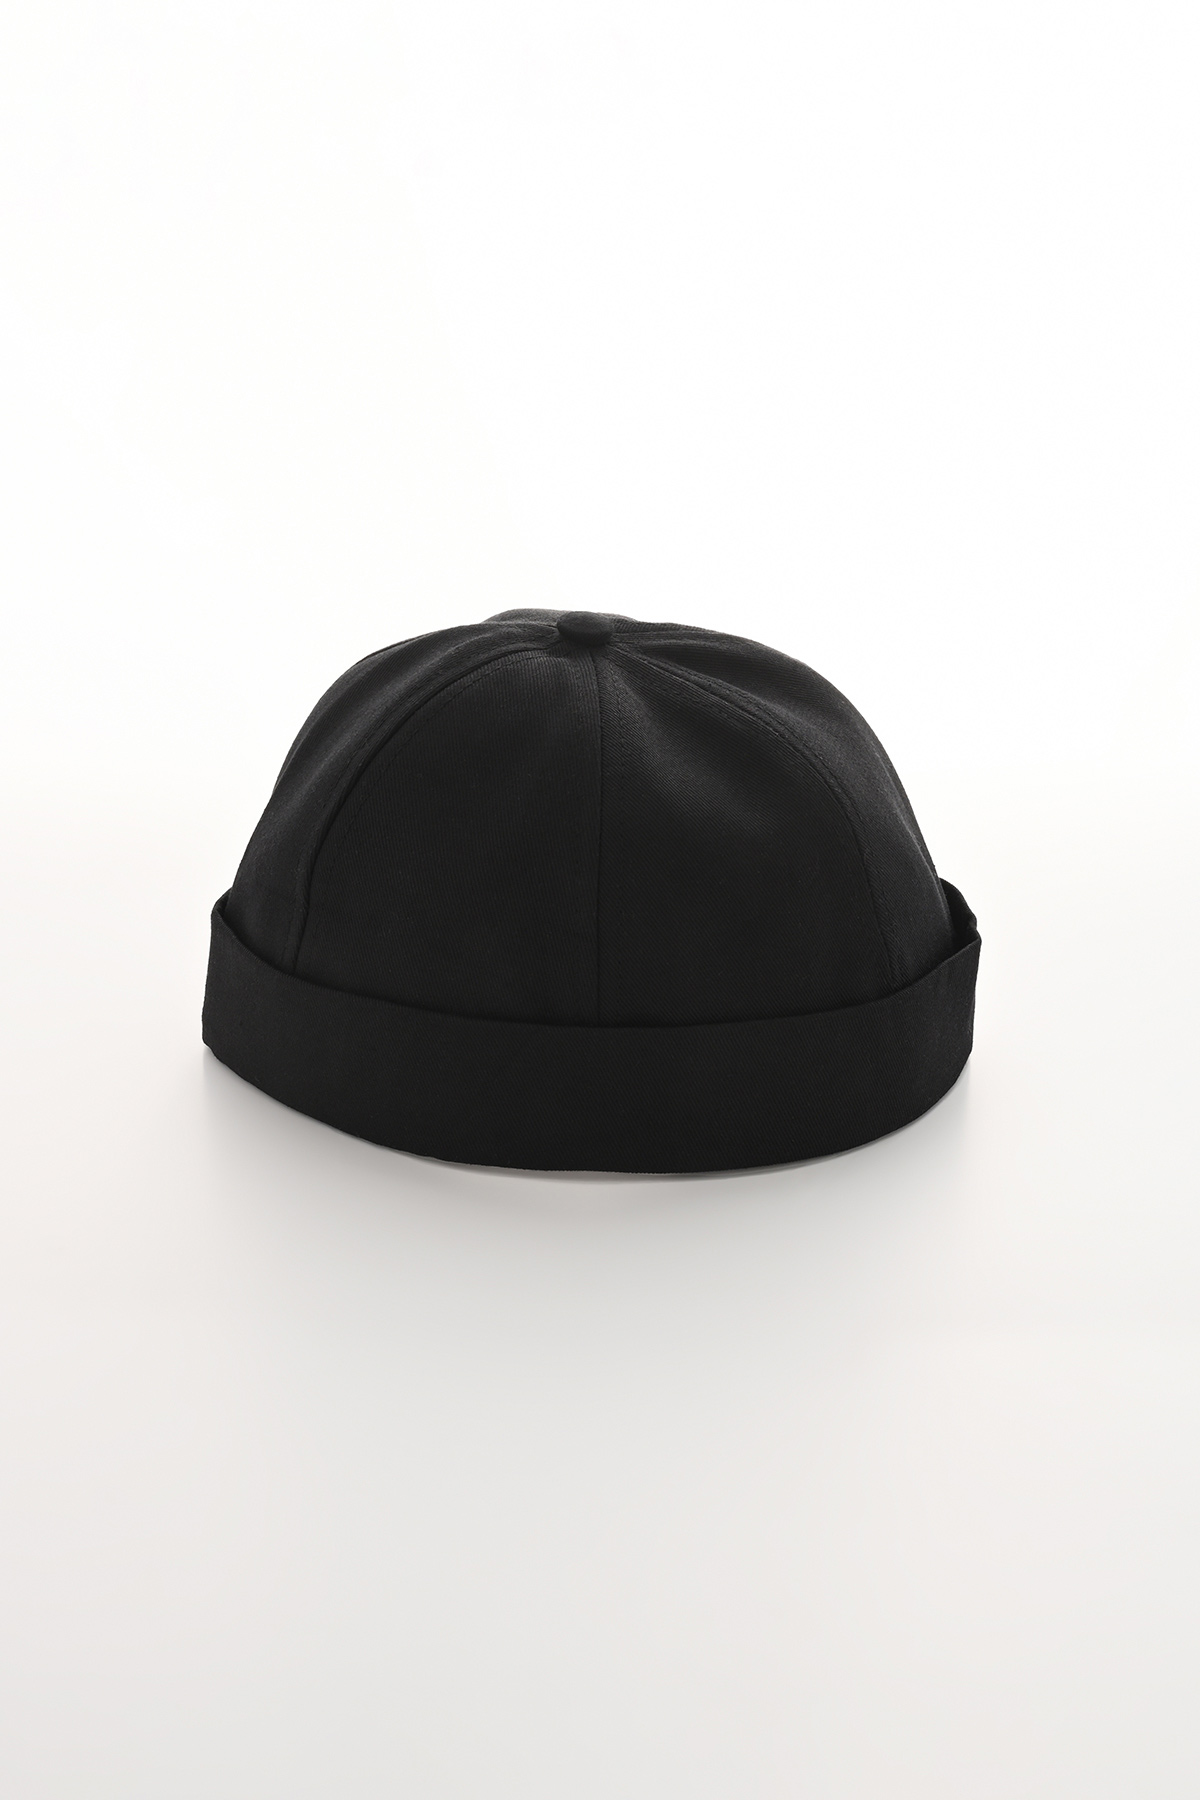 Dembu Şapka siyah